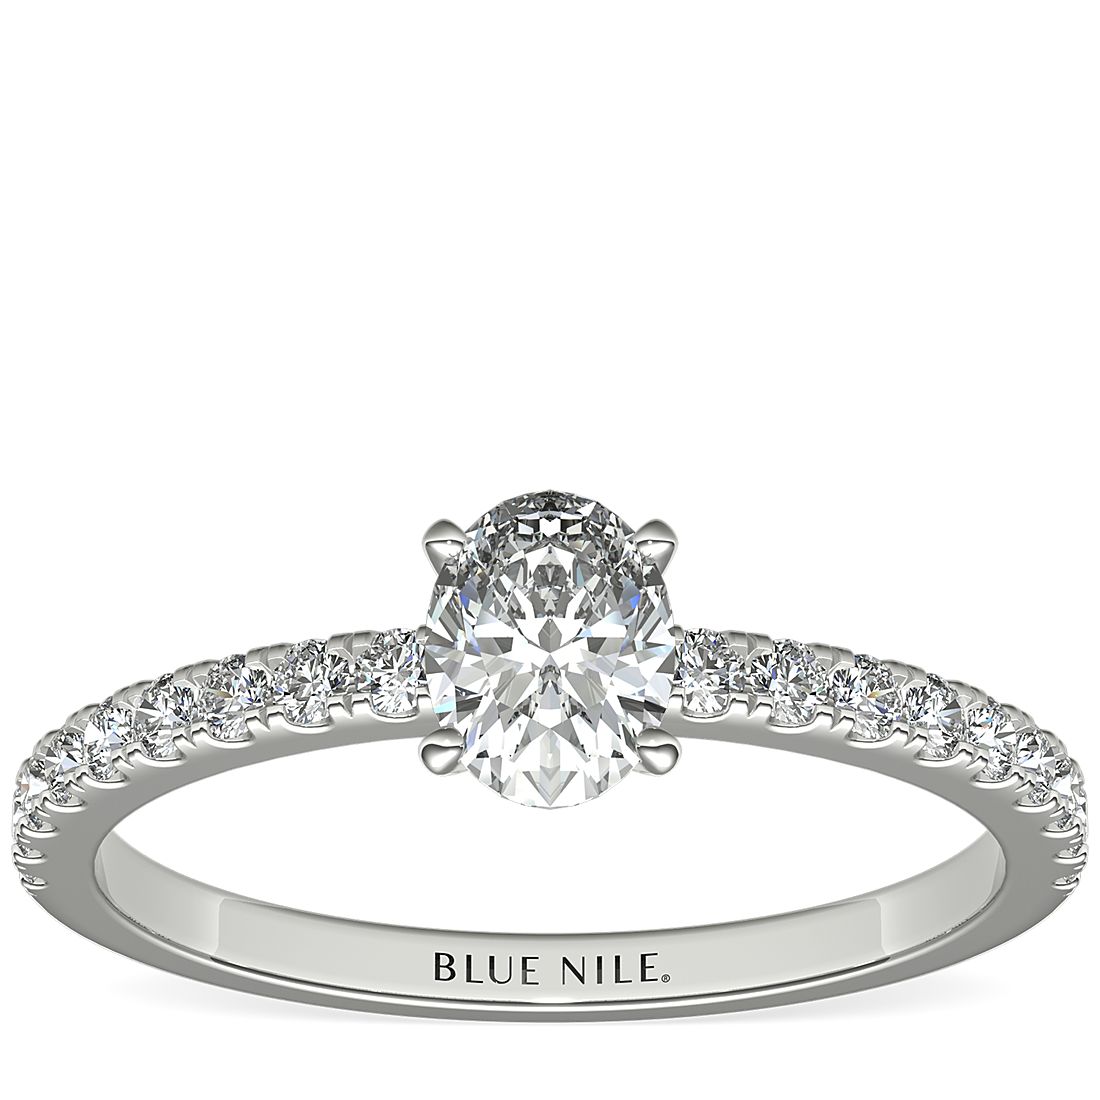 1/2 Carat Ready-to-Ship Oval-Cut Petite Pavé Diamond Engagement Ring in Platinum